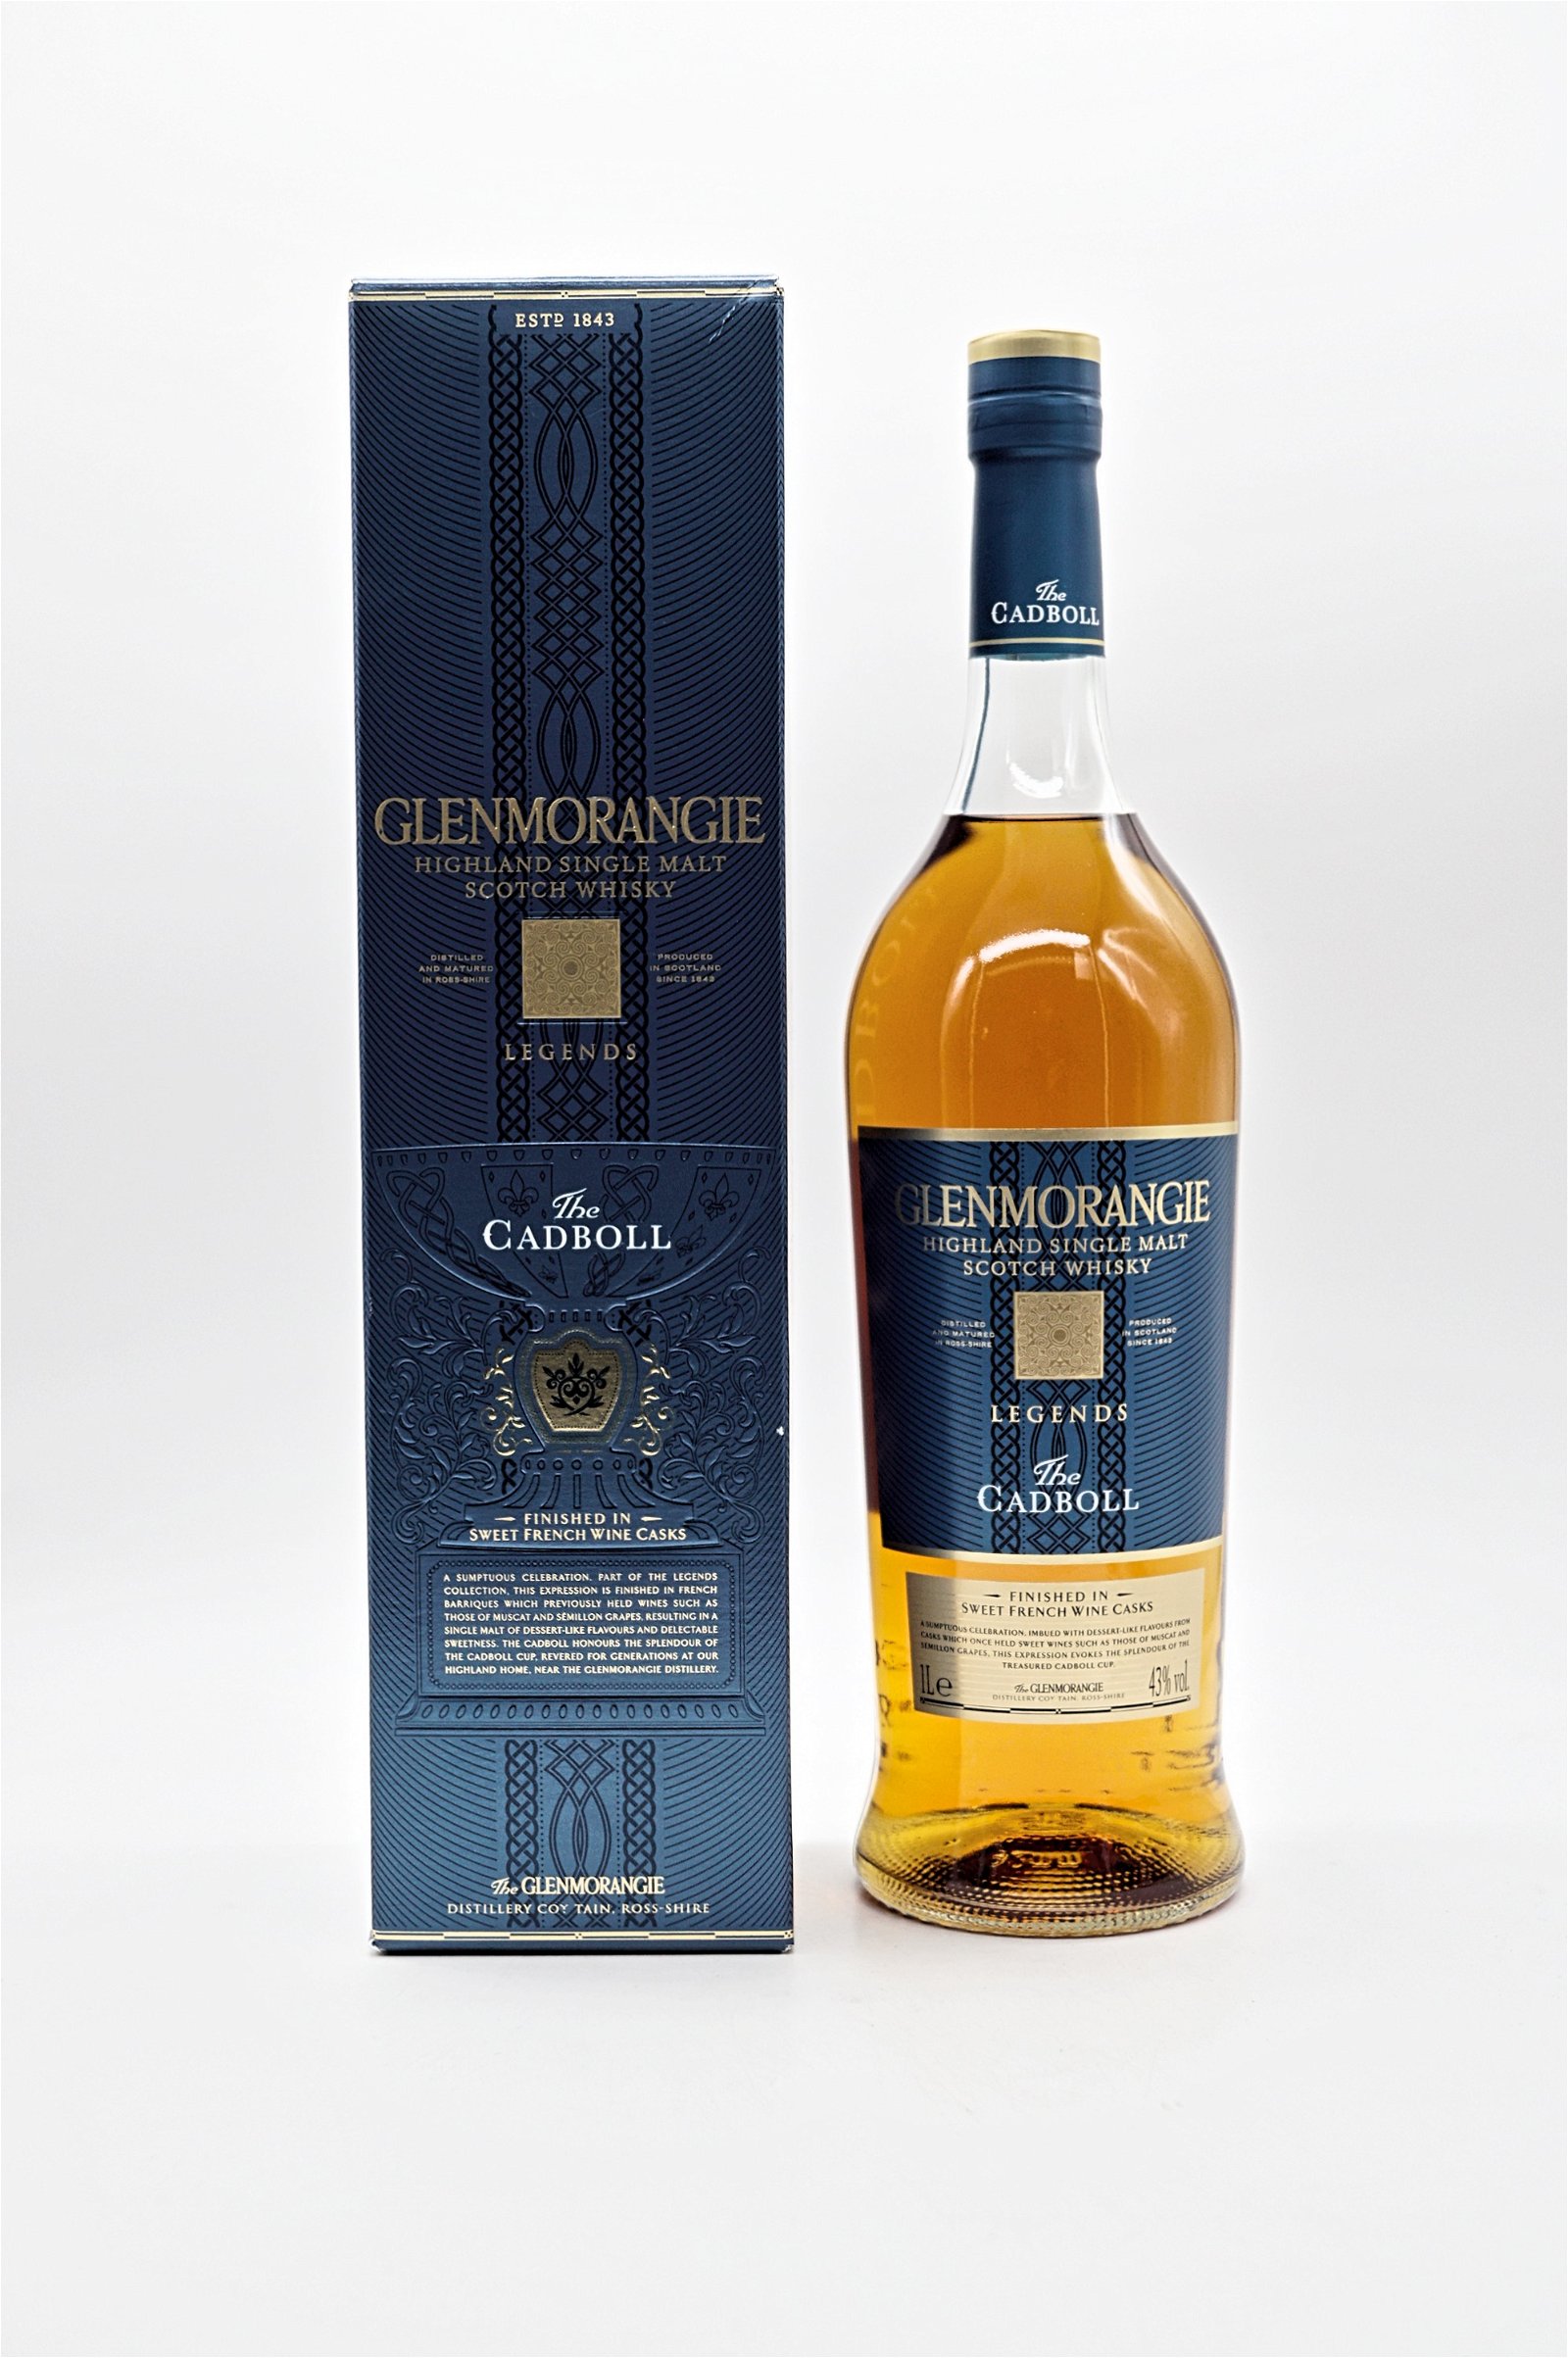 Glenmorangie The Cadboll Highland Single Malt Scotch Whisky